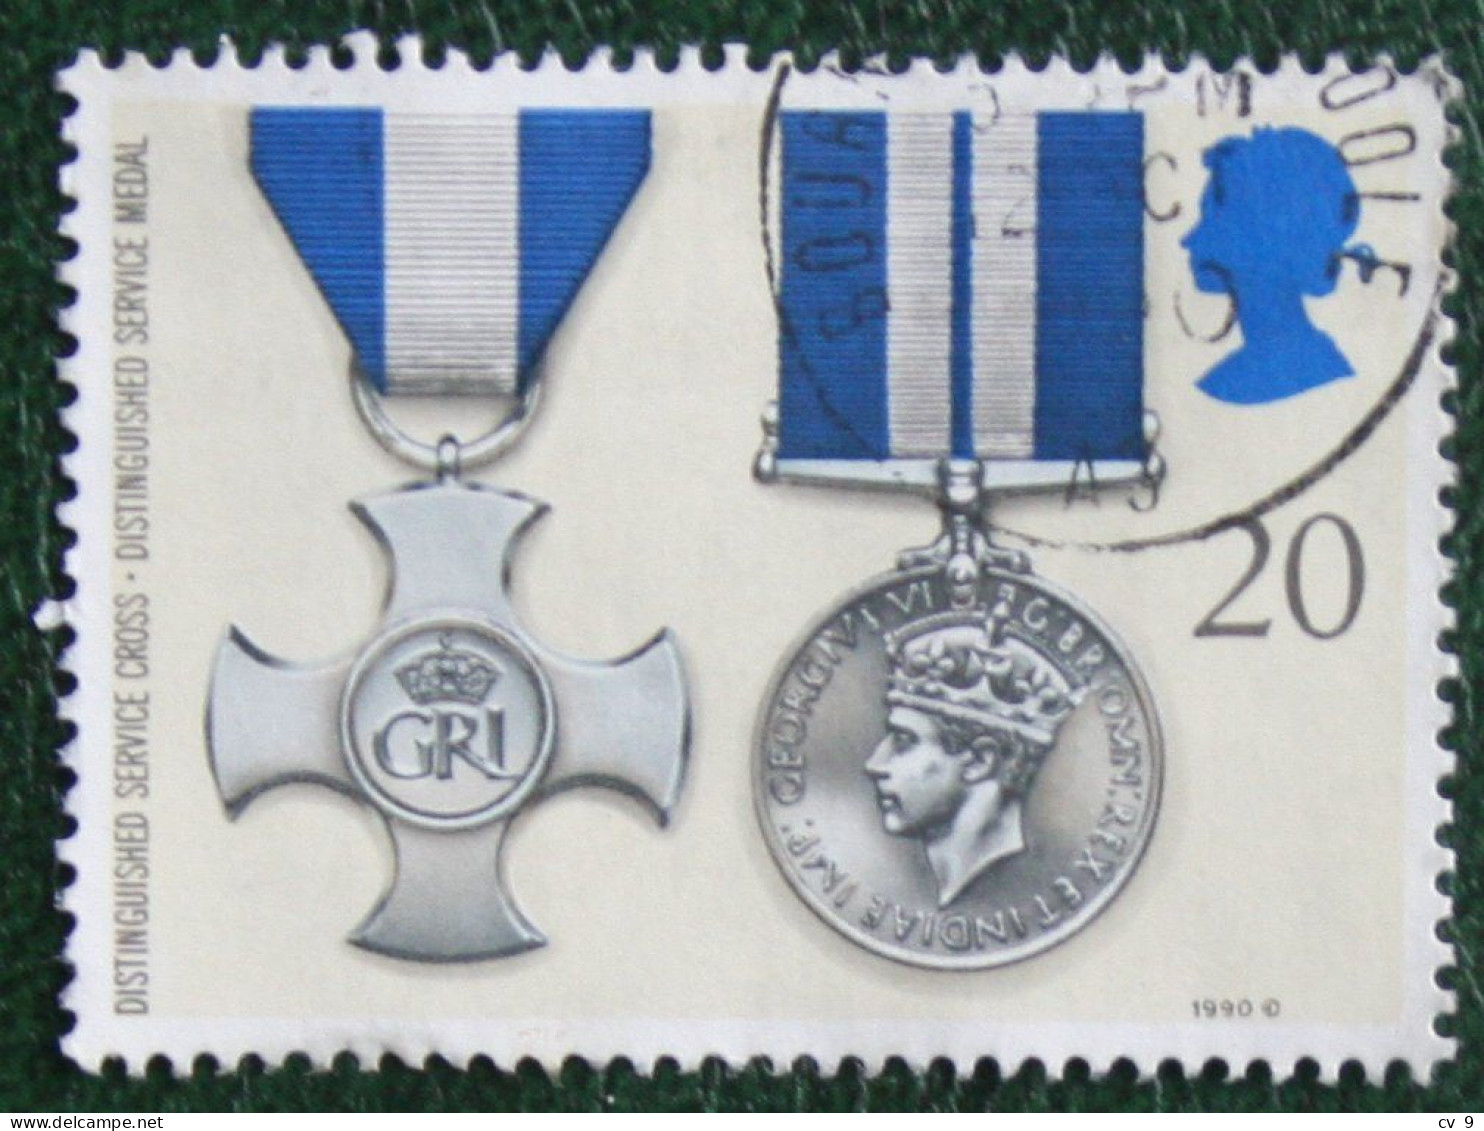 Awards Bravery Medals (Mi 1294) 1990 Used Gebruikt Oblitere ENGLAND GRANDE-BRETAGNE GB GREAT BRITAIN - Gebraucht